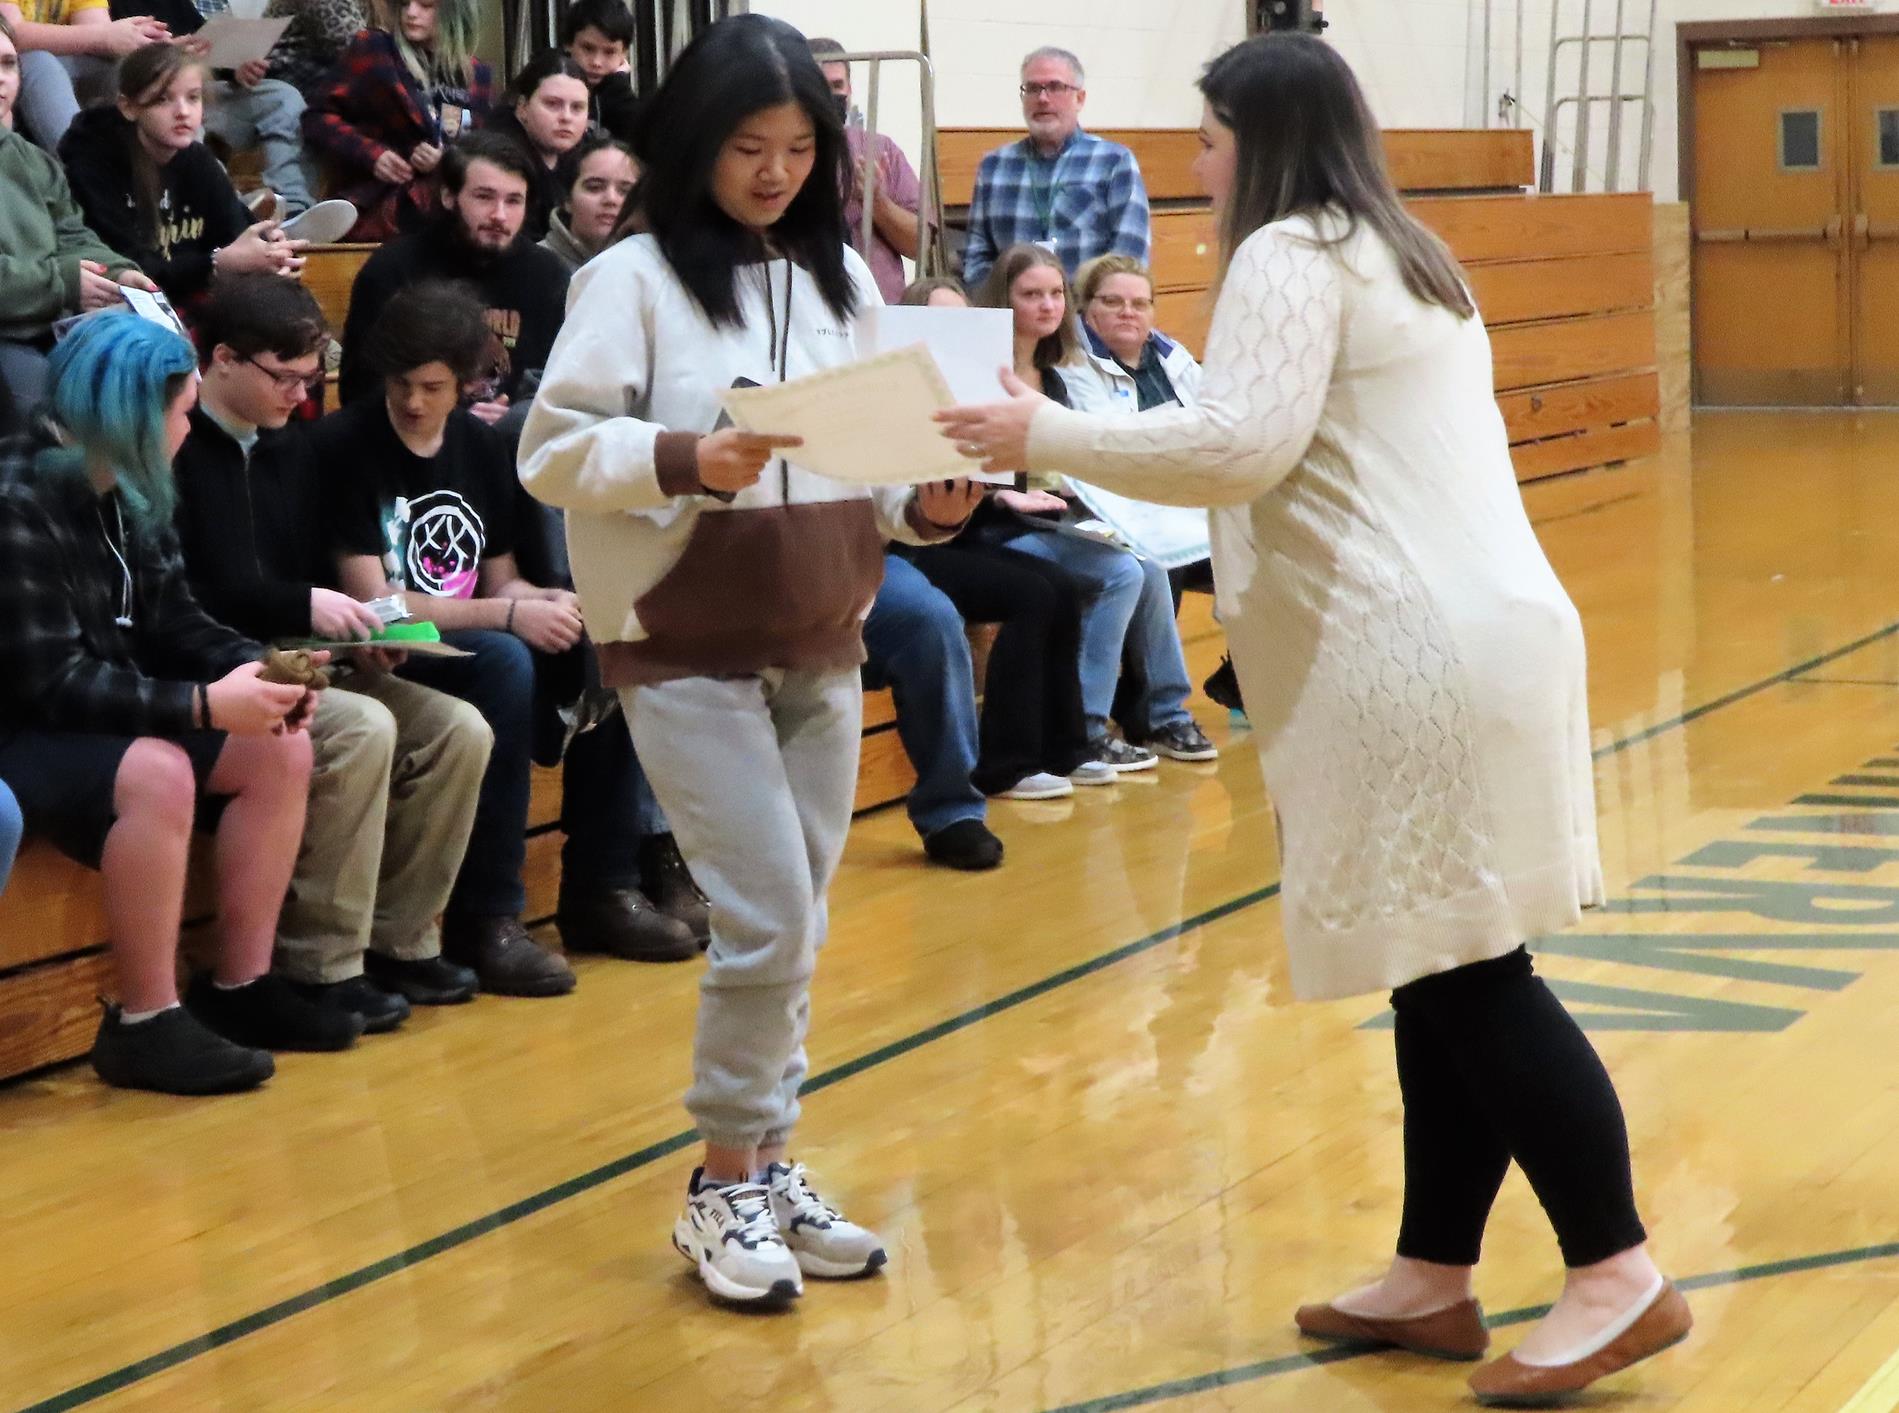 Student receiving award image